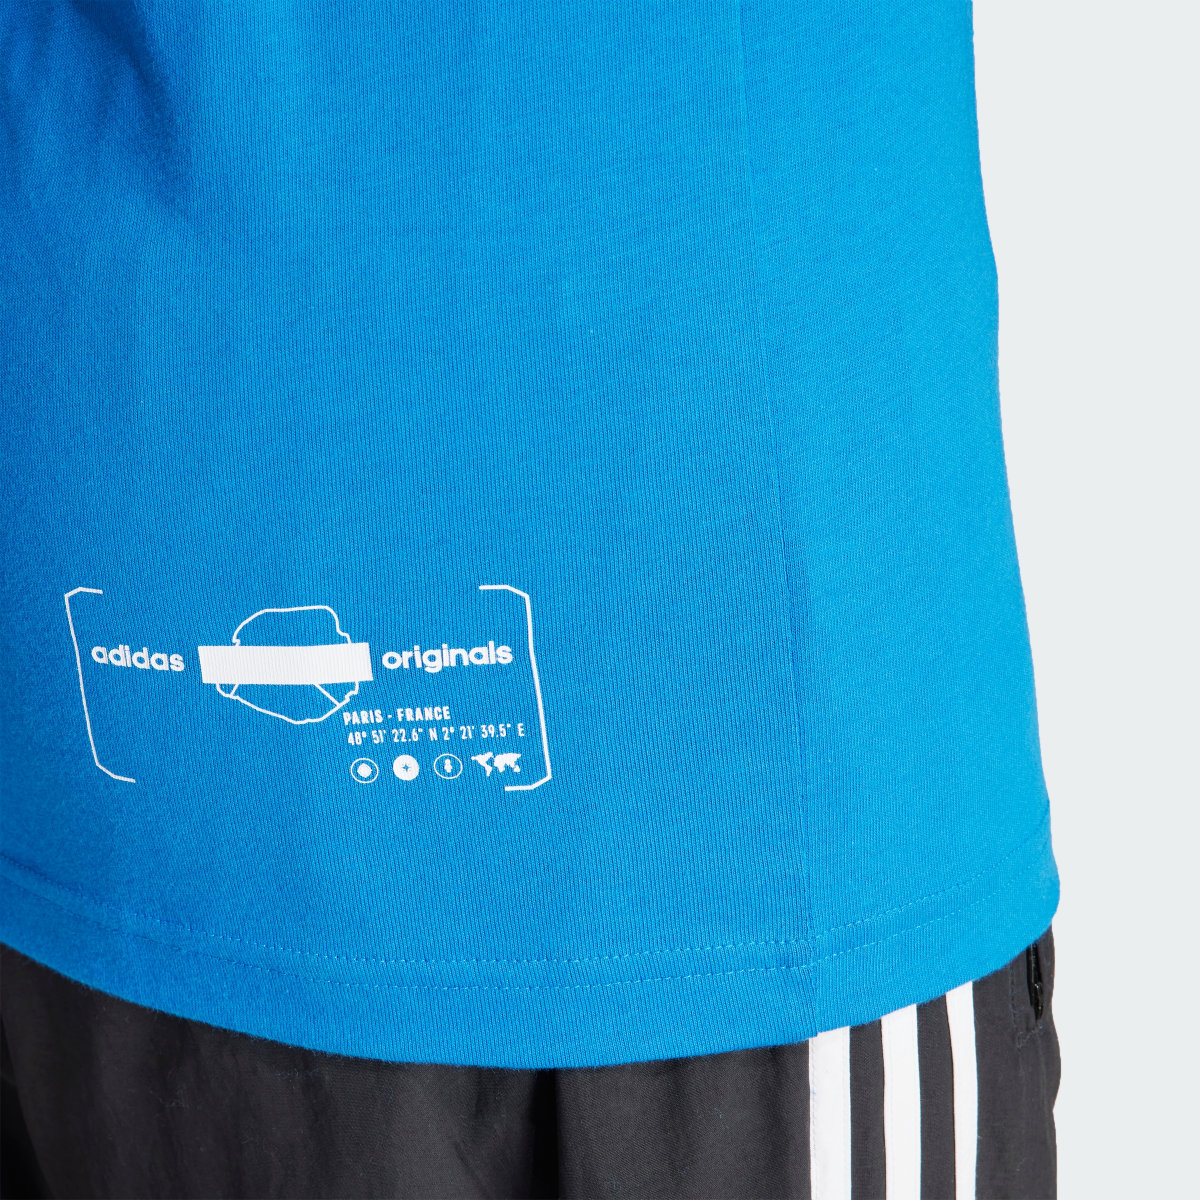 Adidas Paris Graphic T-Shirt. 7